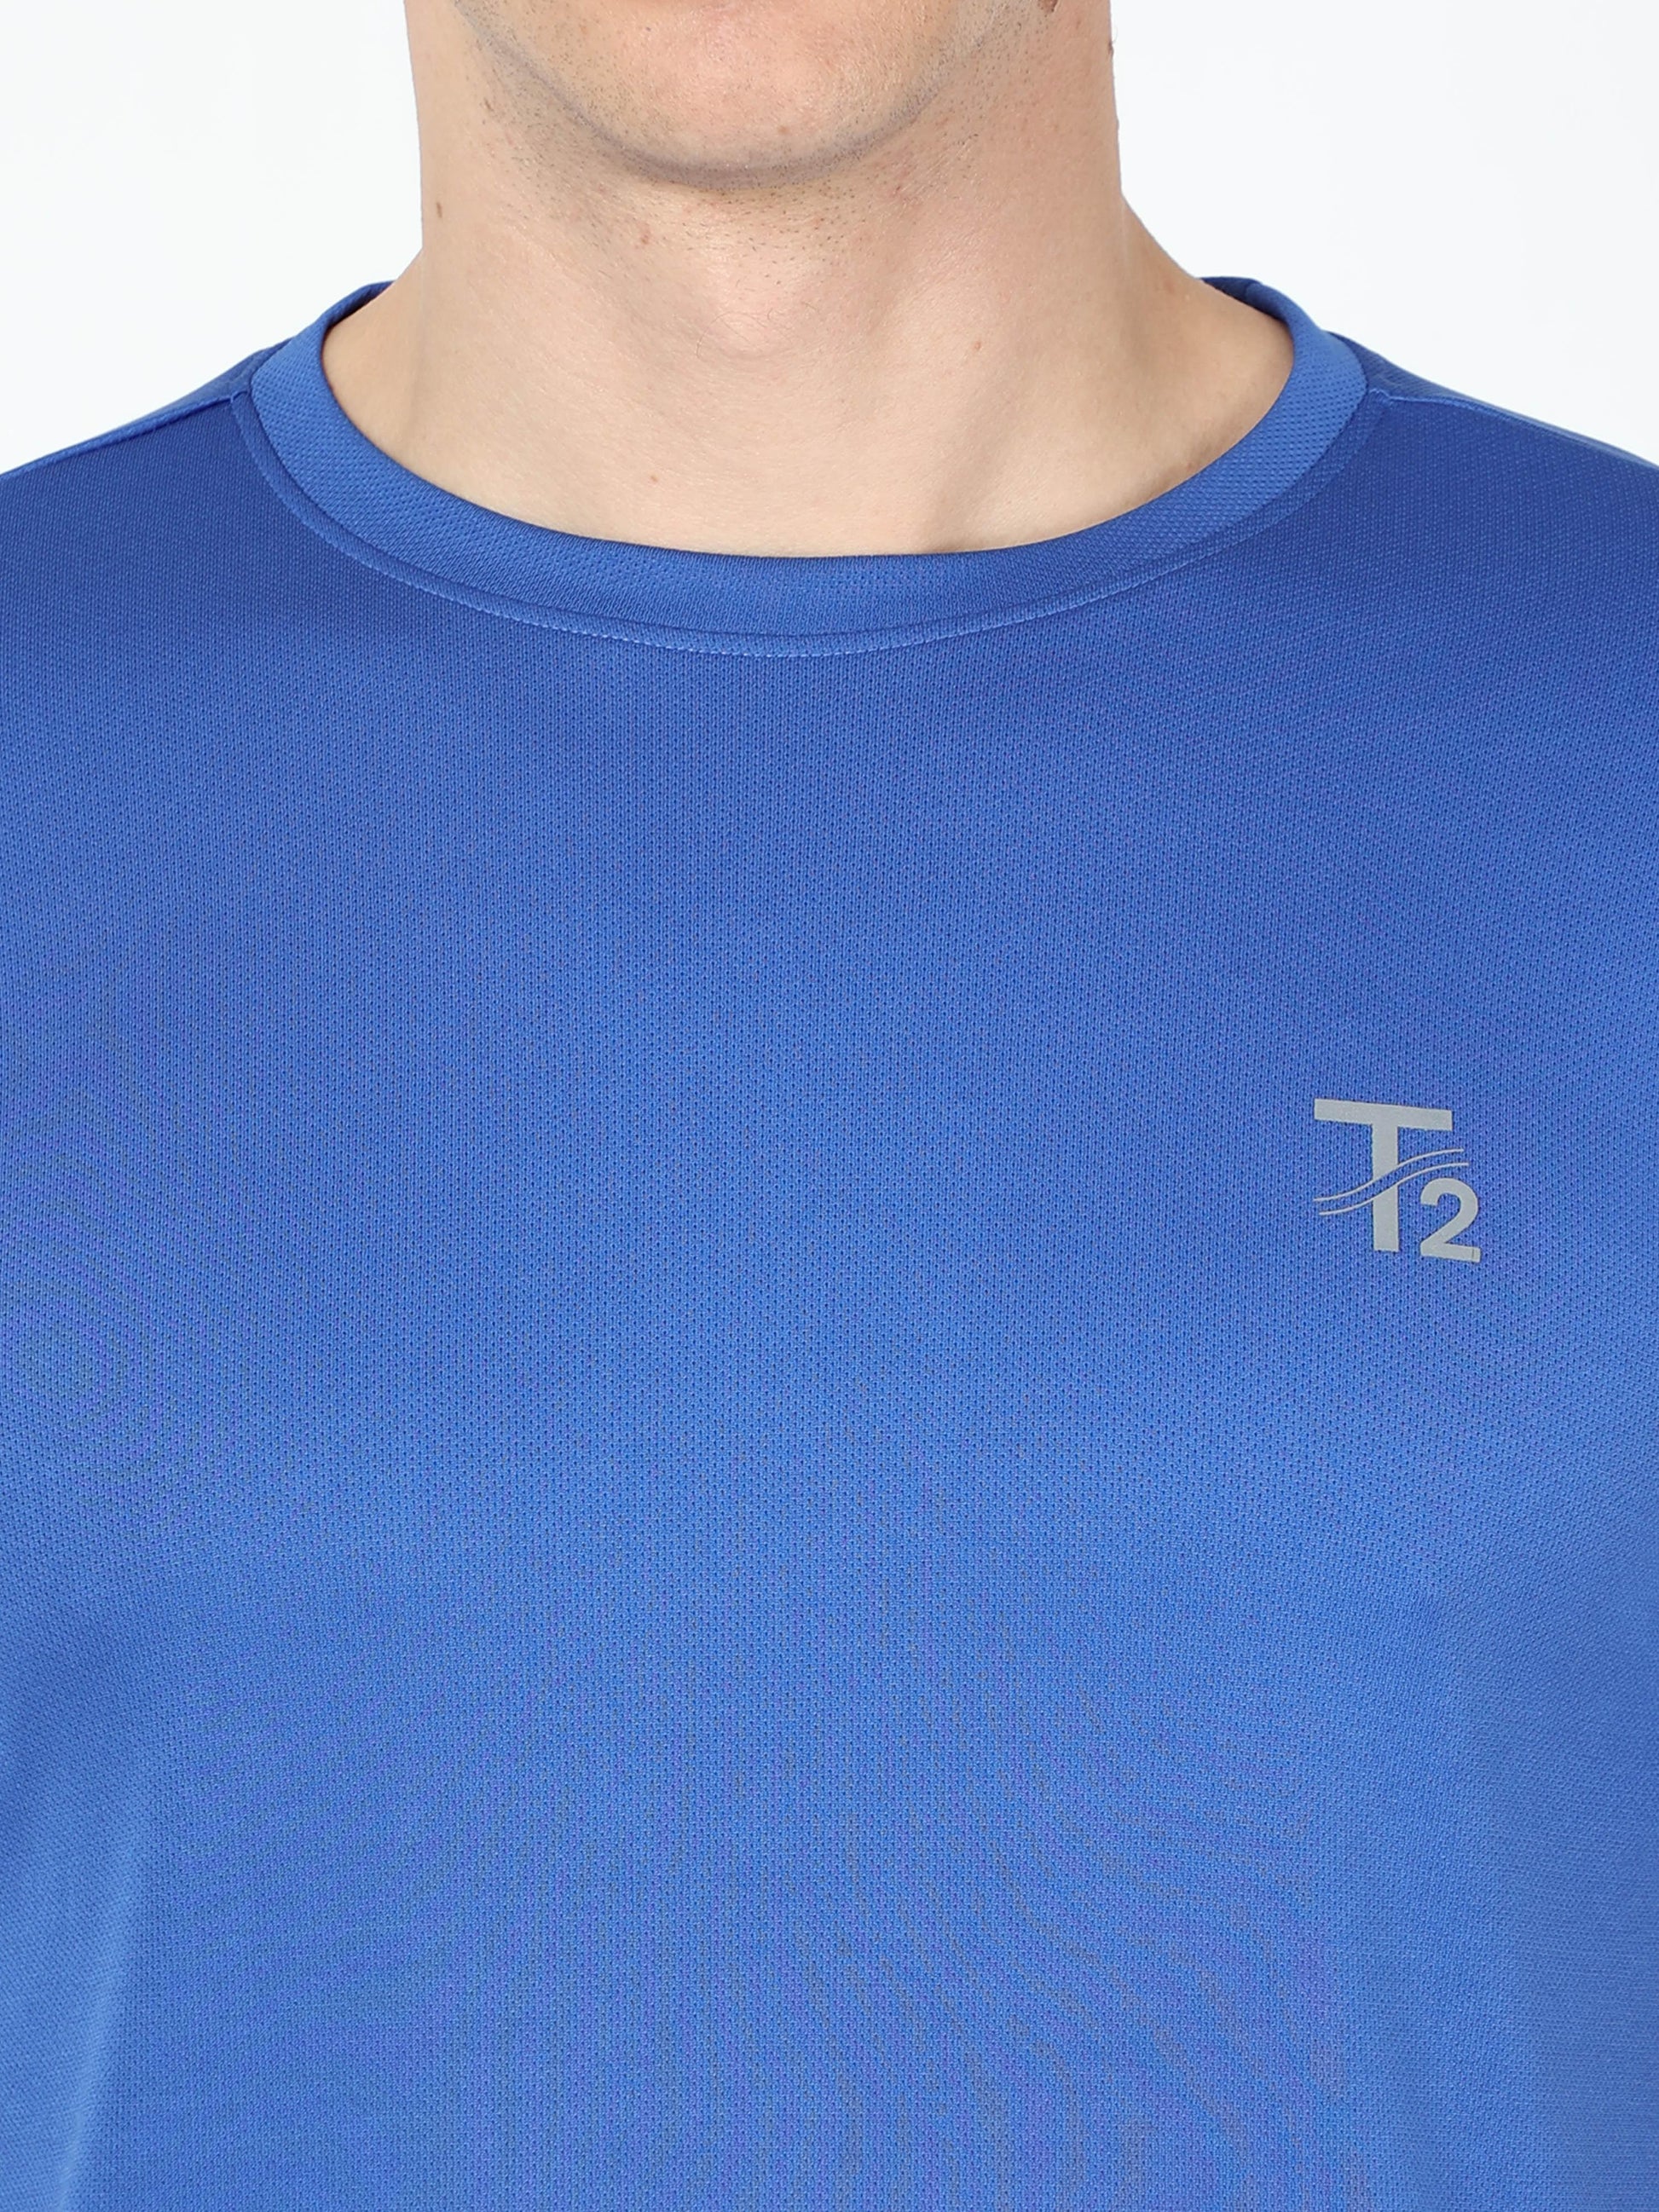 Athleisure Men's Premium T-Shirt – Blue